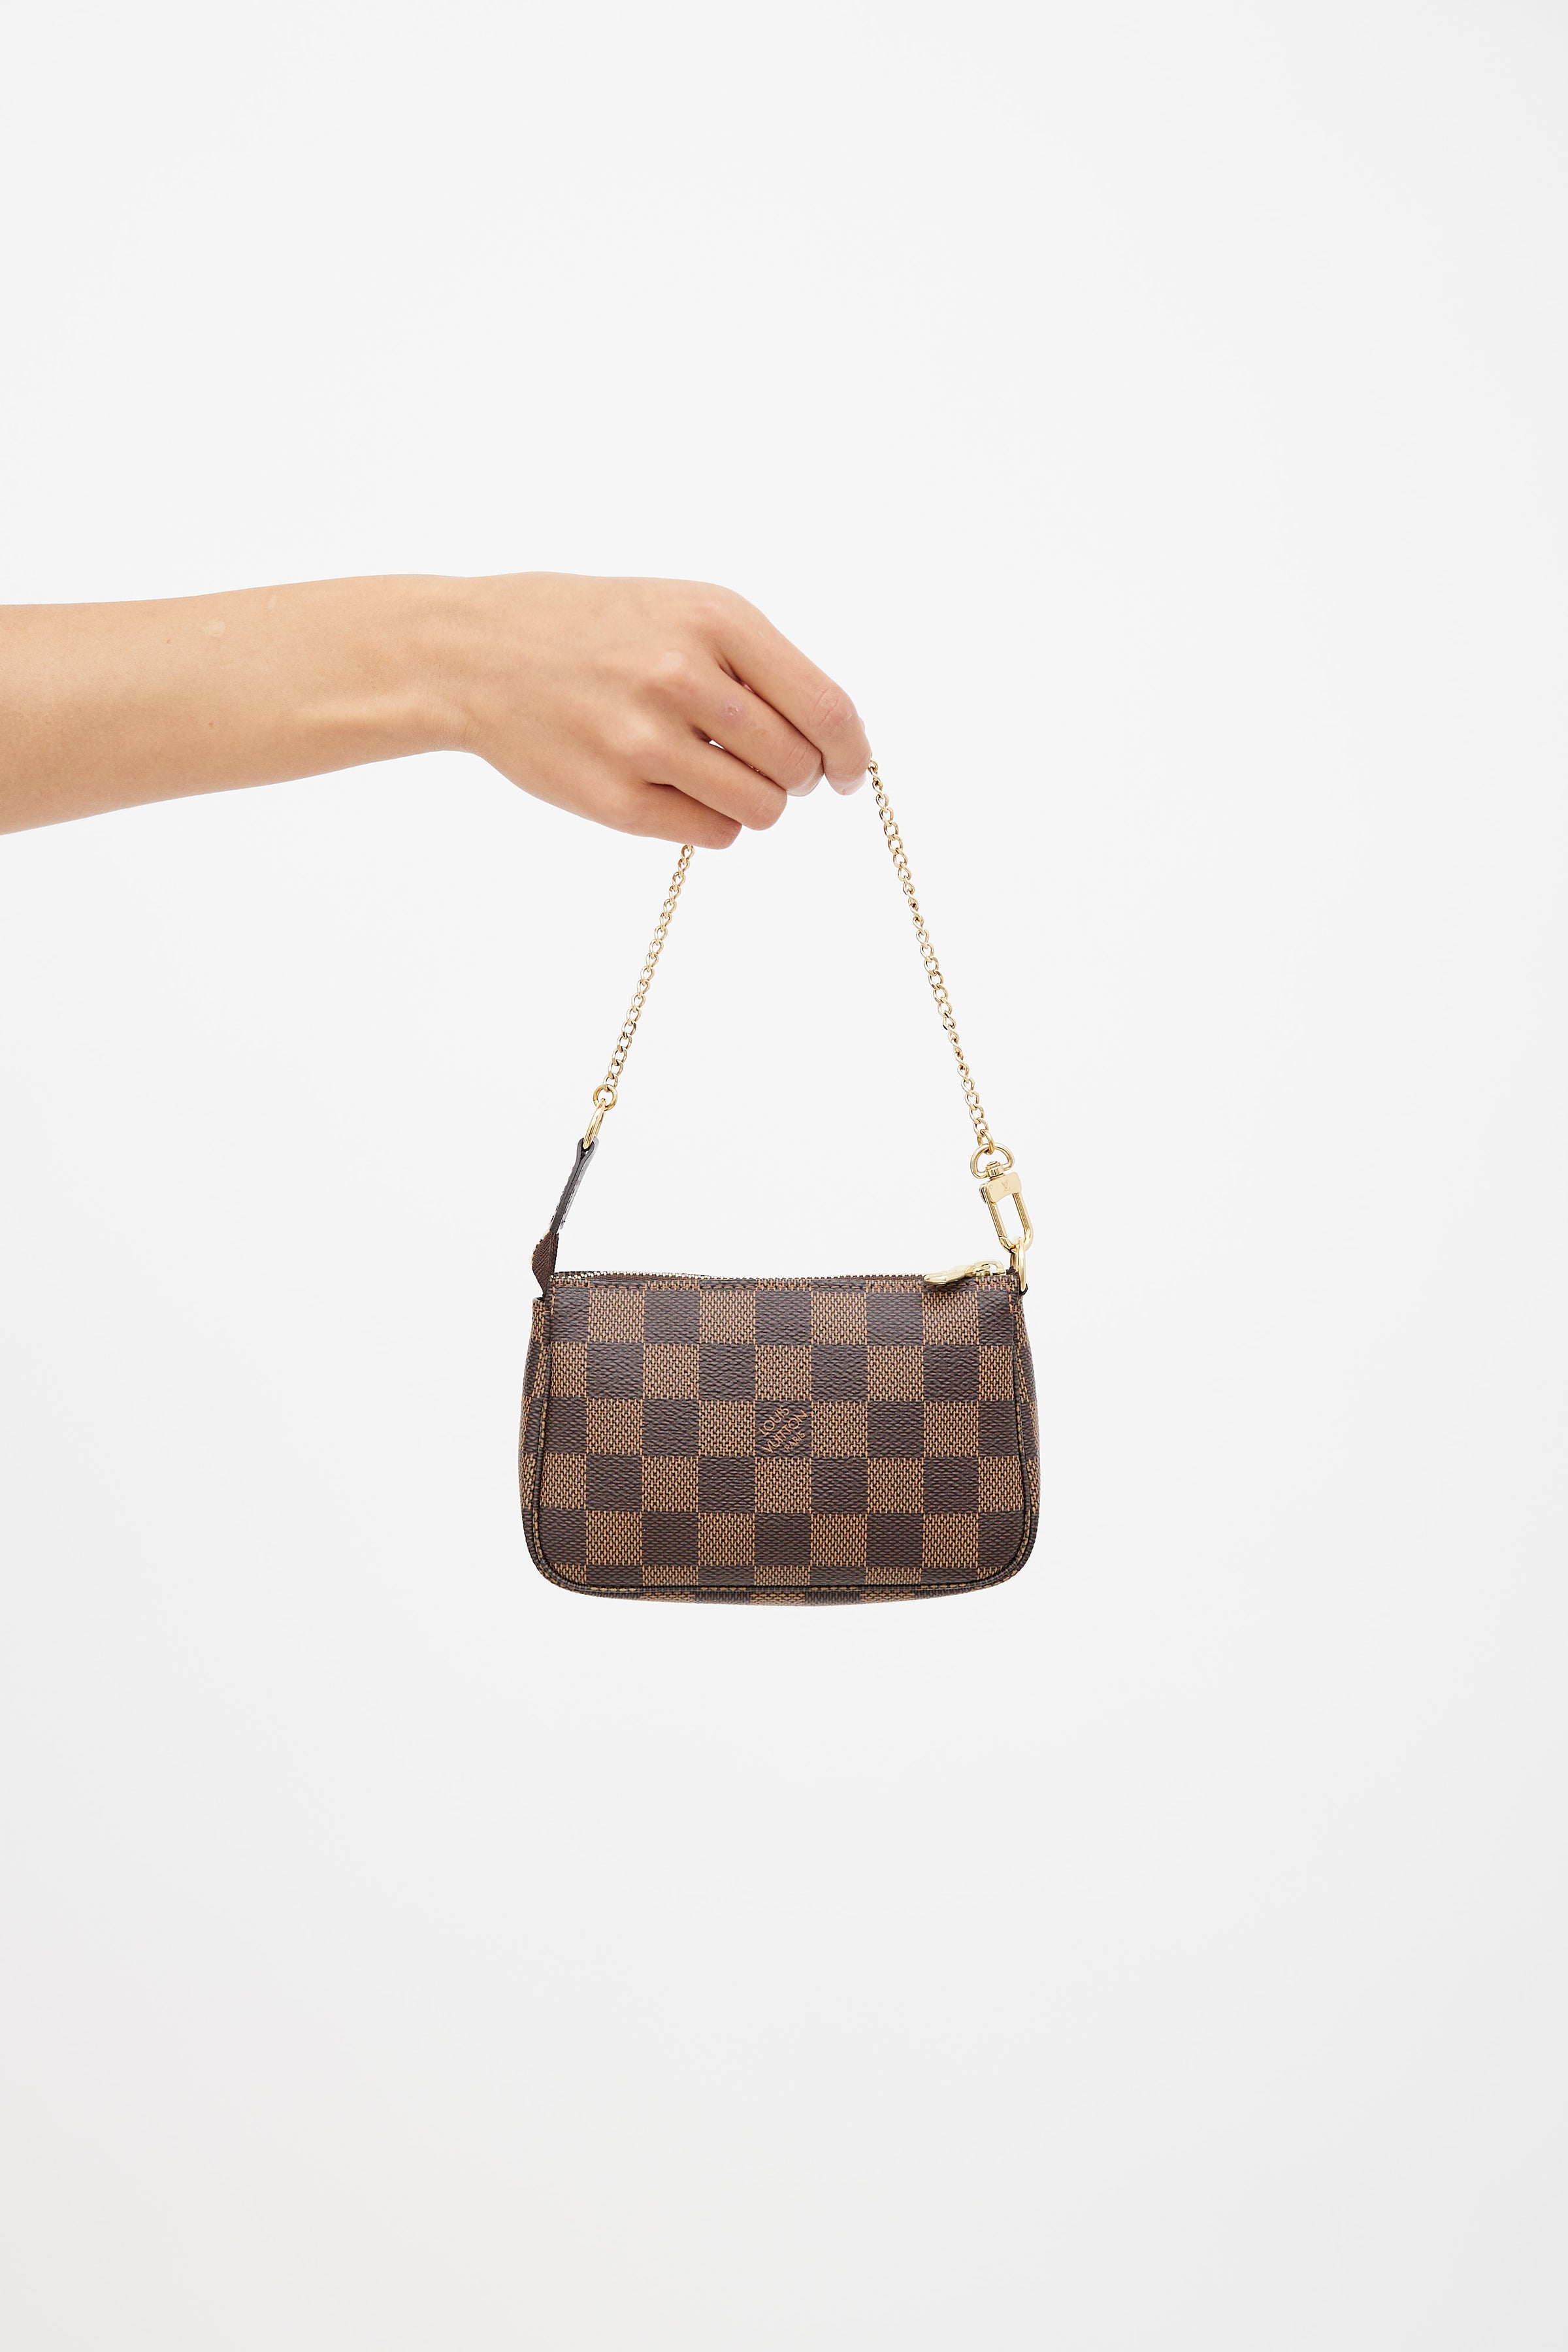 What's In my Bag featuring Louis Vuitton Pochette Accessoires